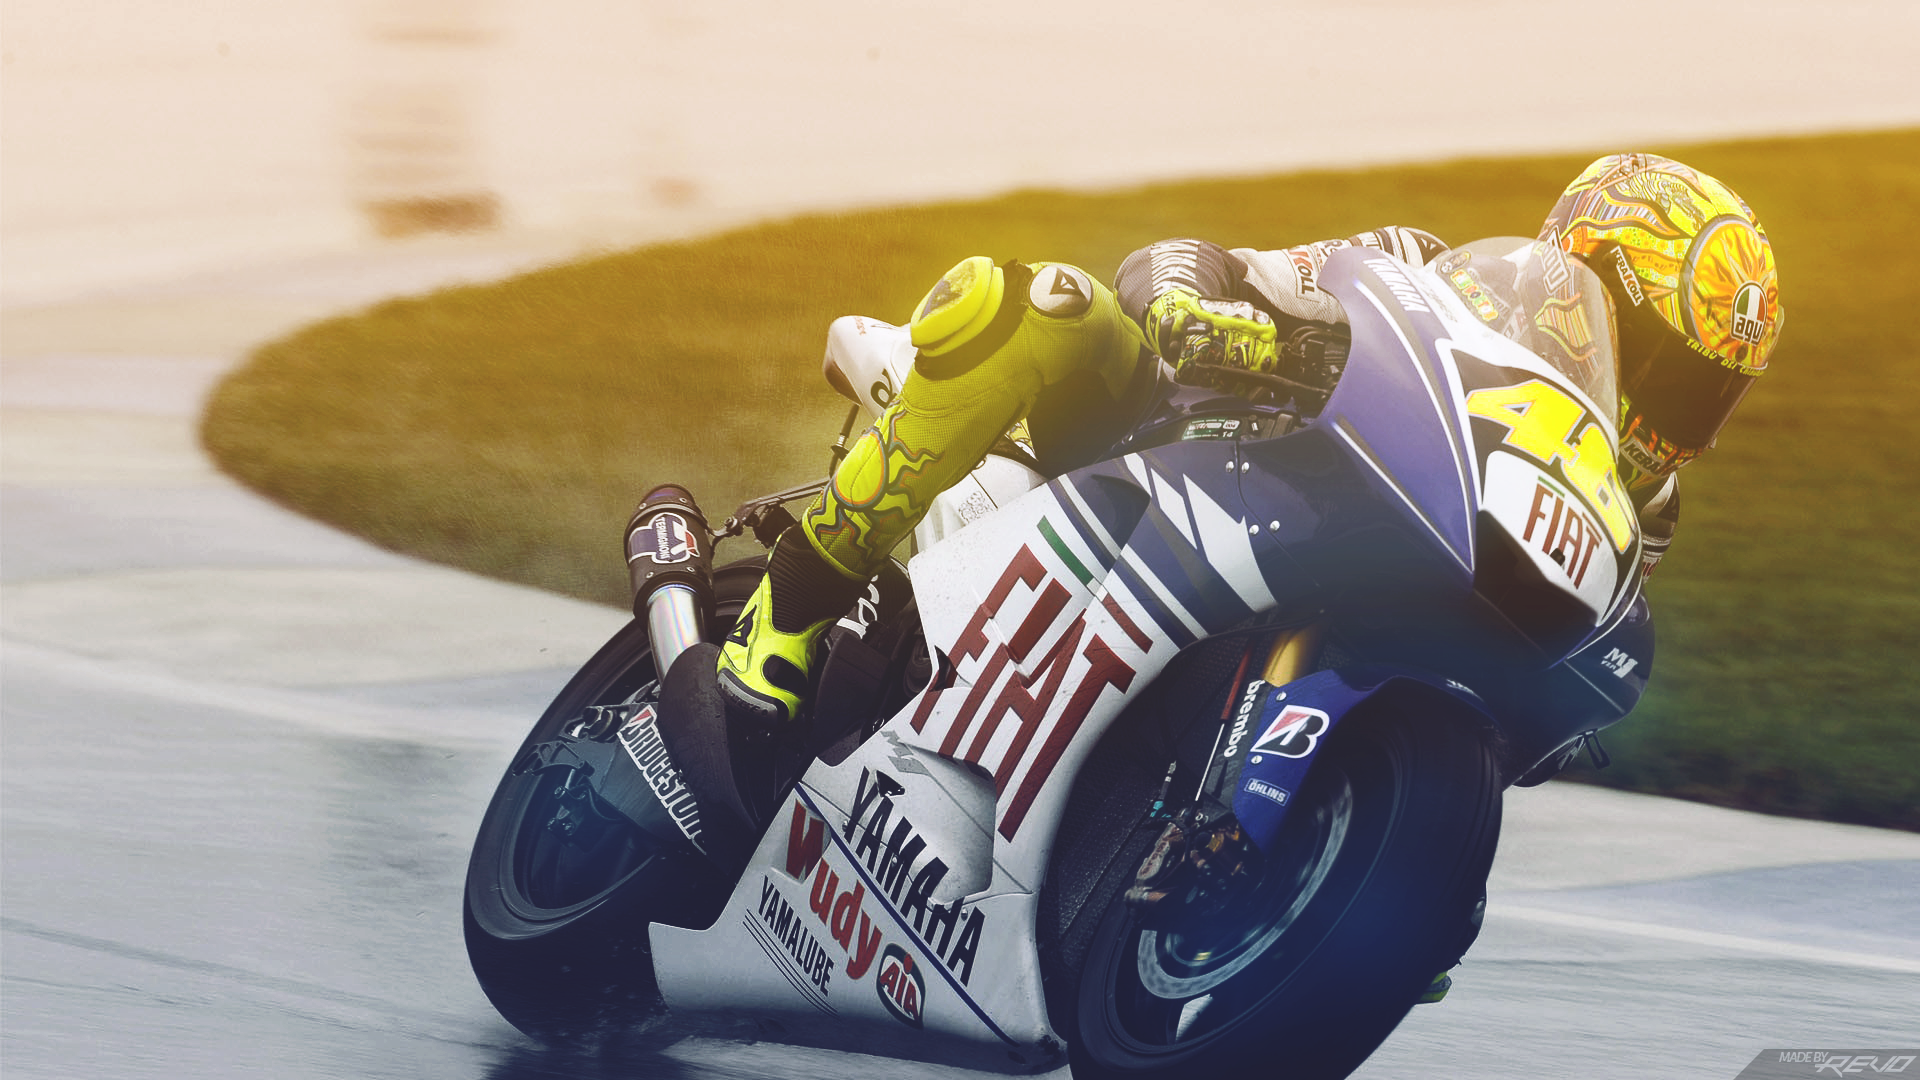 General 1920x1080 FIAT Yamaha motorcycle vehicle racing sport Valentino Rossi motorsport Racing driver Japanese motorcycles